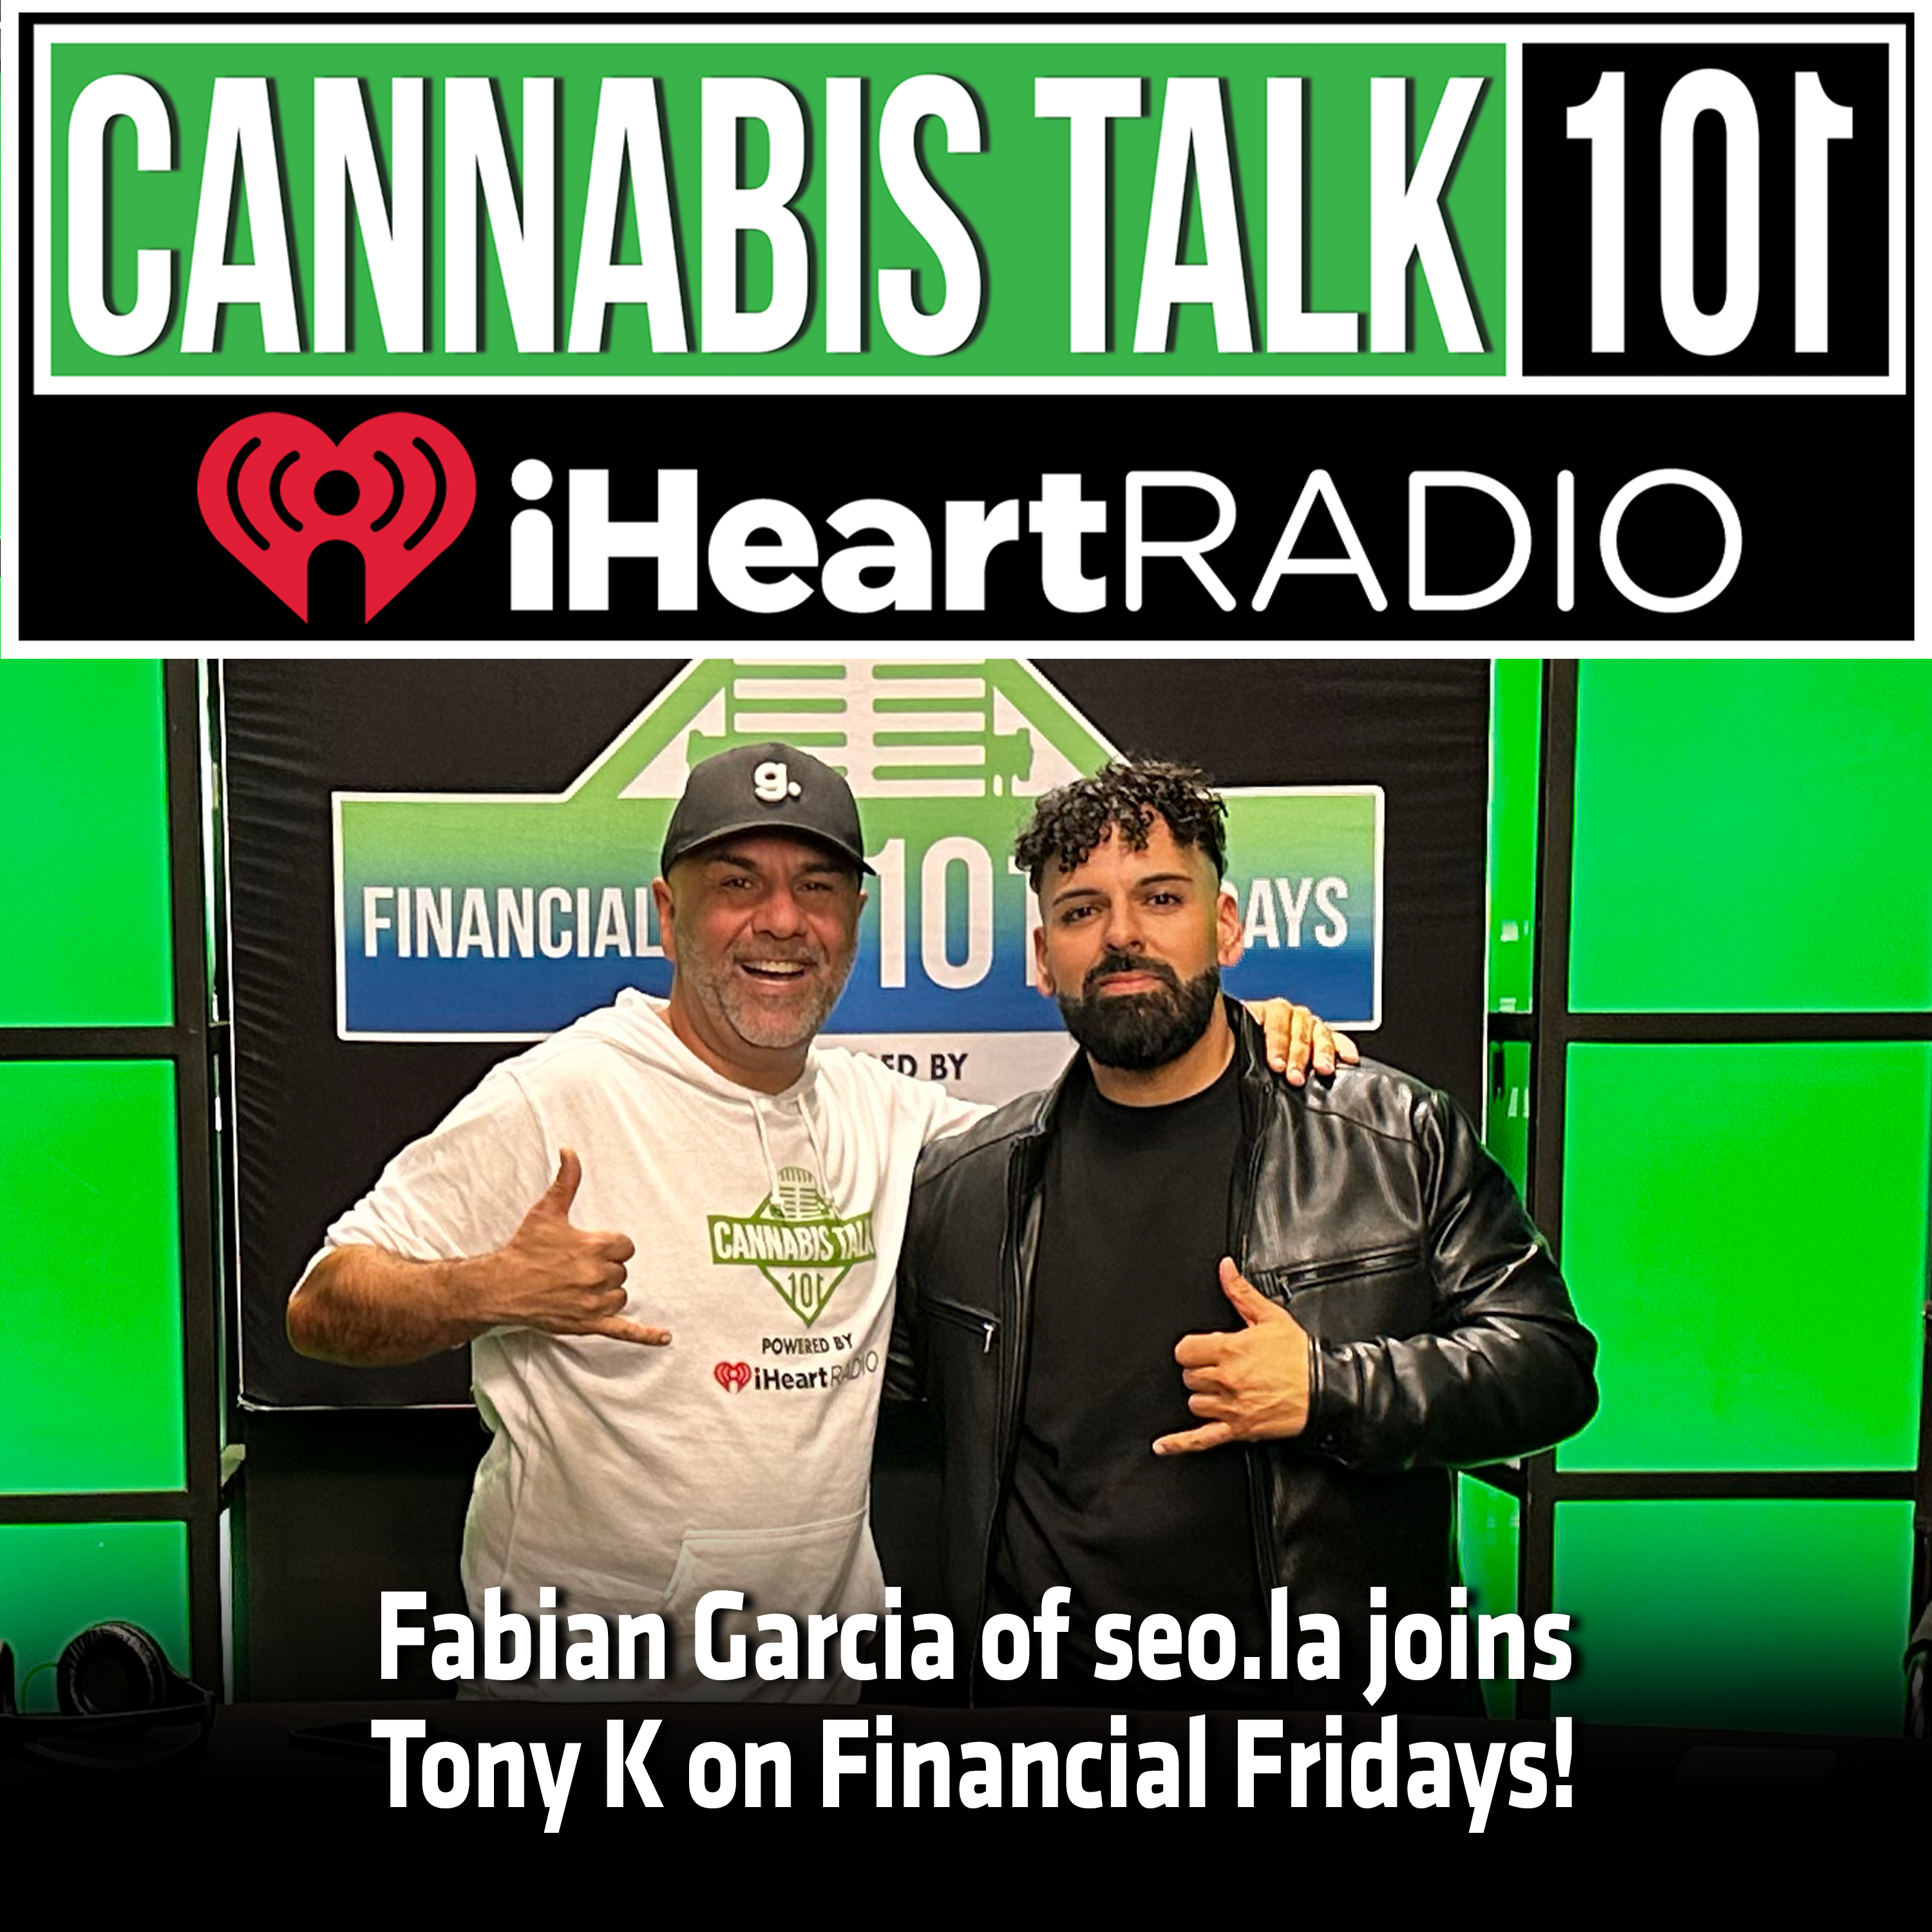 Fabian Garcia of seo.la joins Tony K on Financial Fridays!